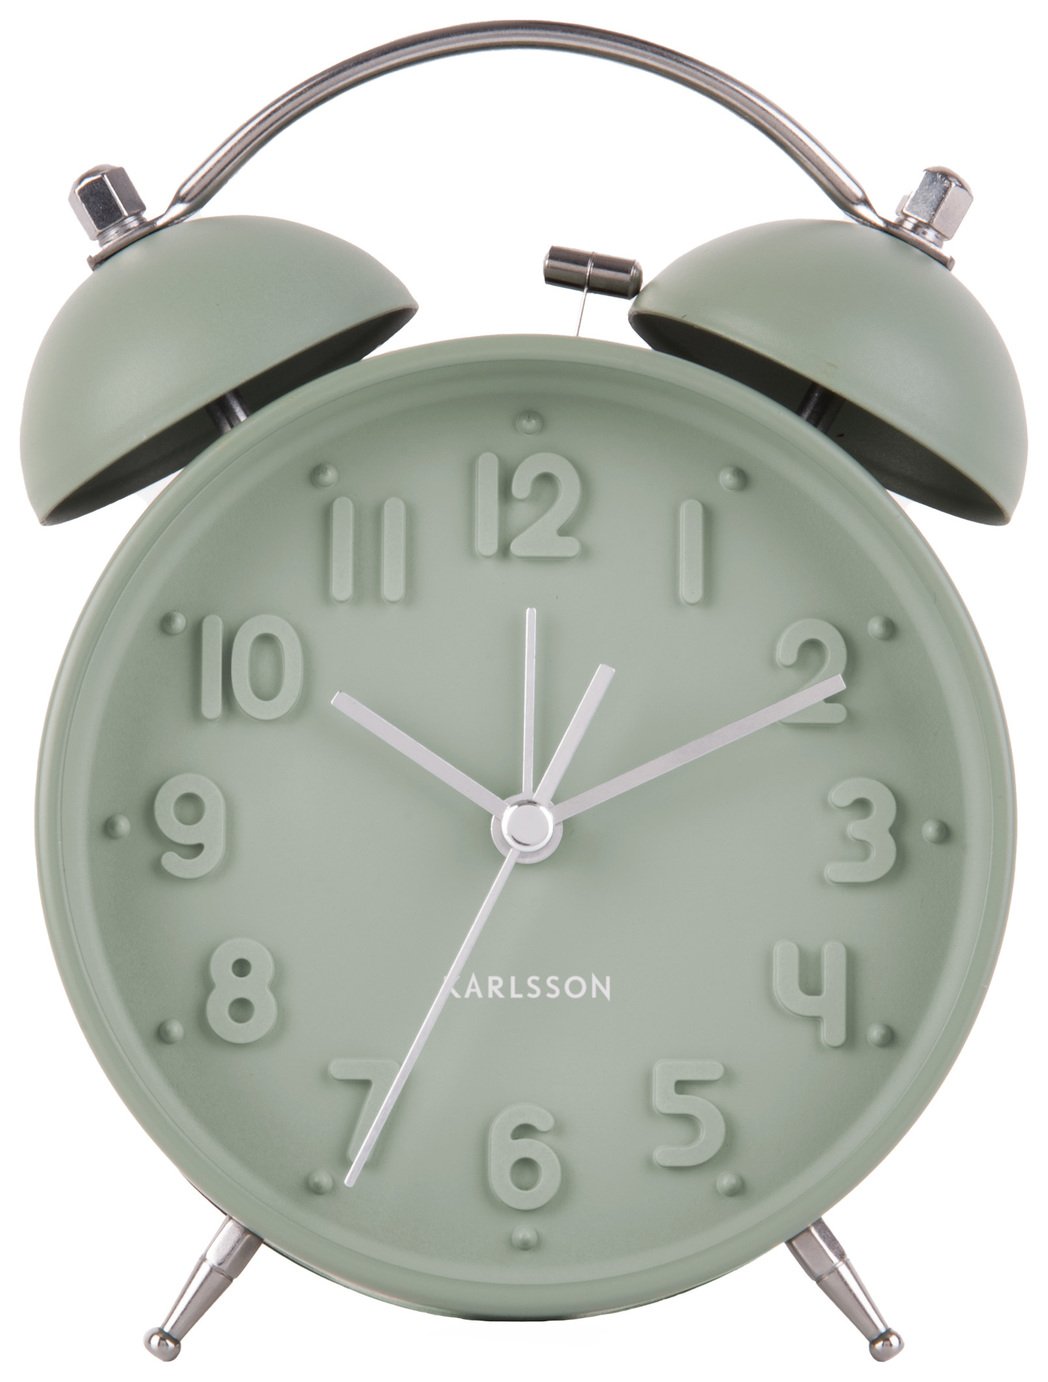 Karlsson Iconic Analogue Alarm Clock - Sage Green